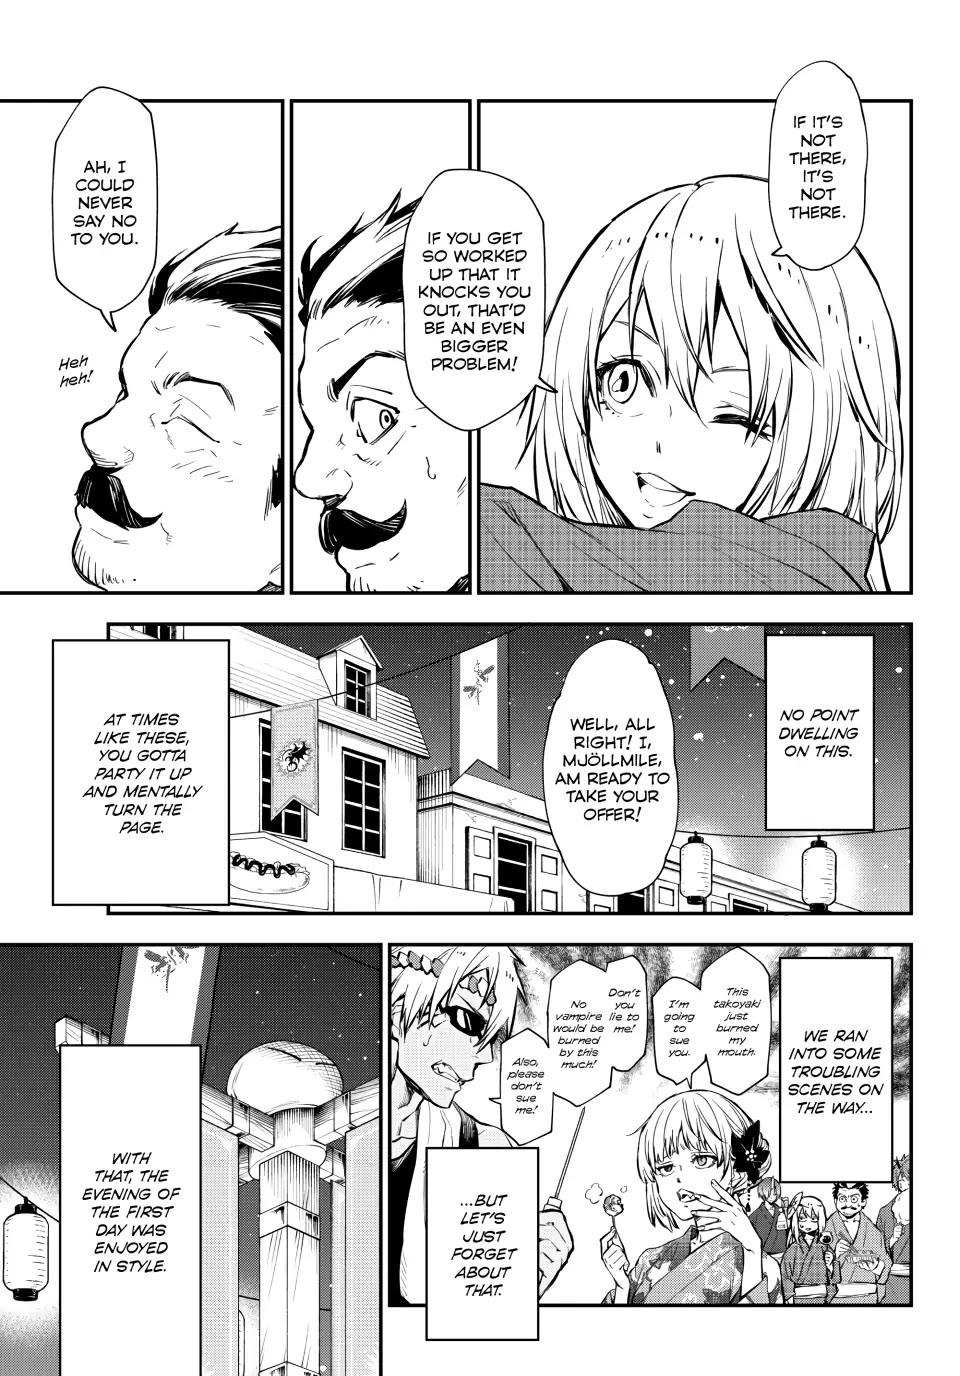 Tensei Shitara Slime Datta Ken Vol.8 Ch.112 Page 18 - Mangago